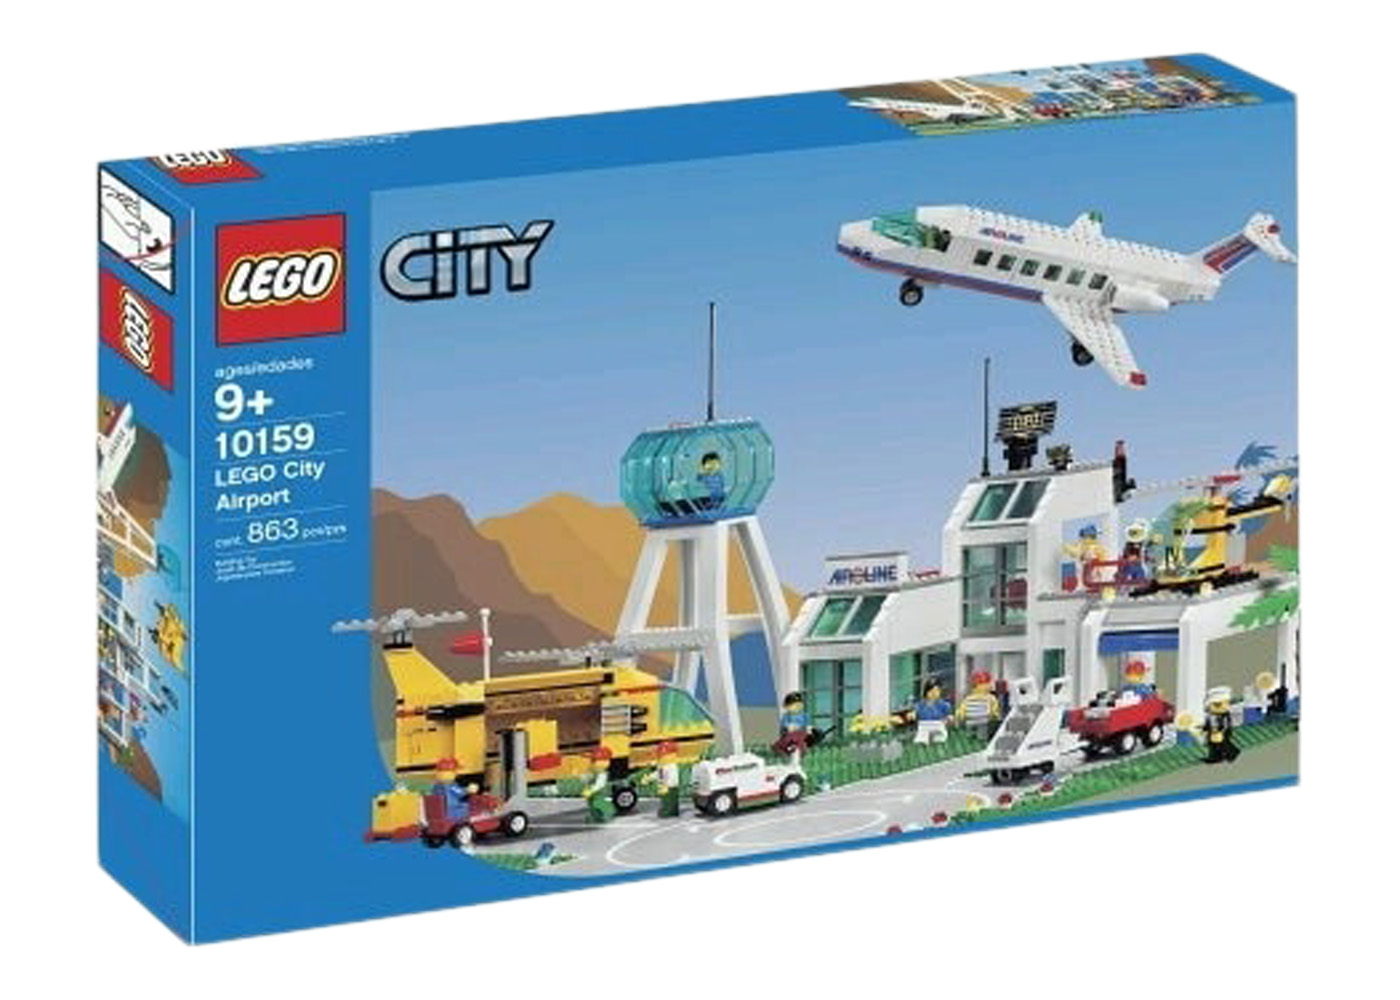 LEGO Town City Airport Set 10159 - JP